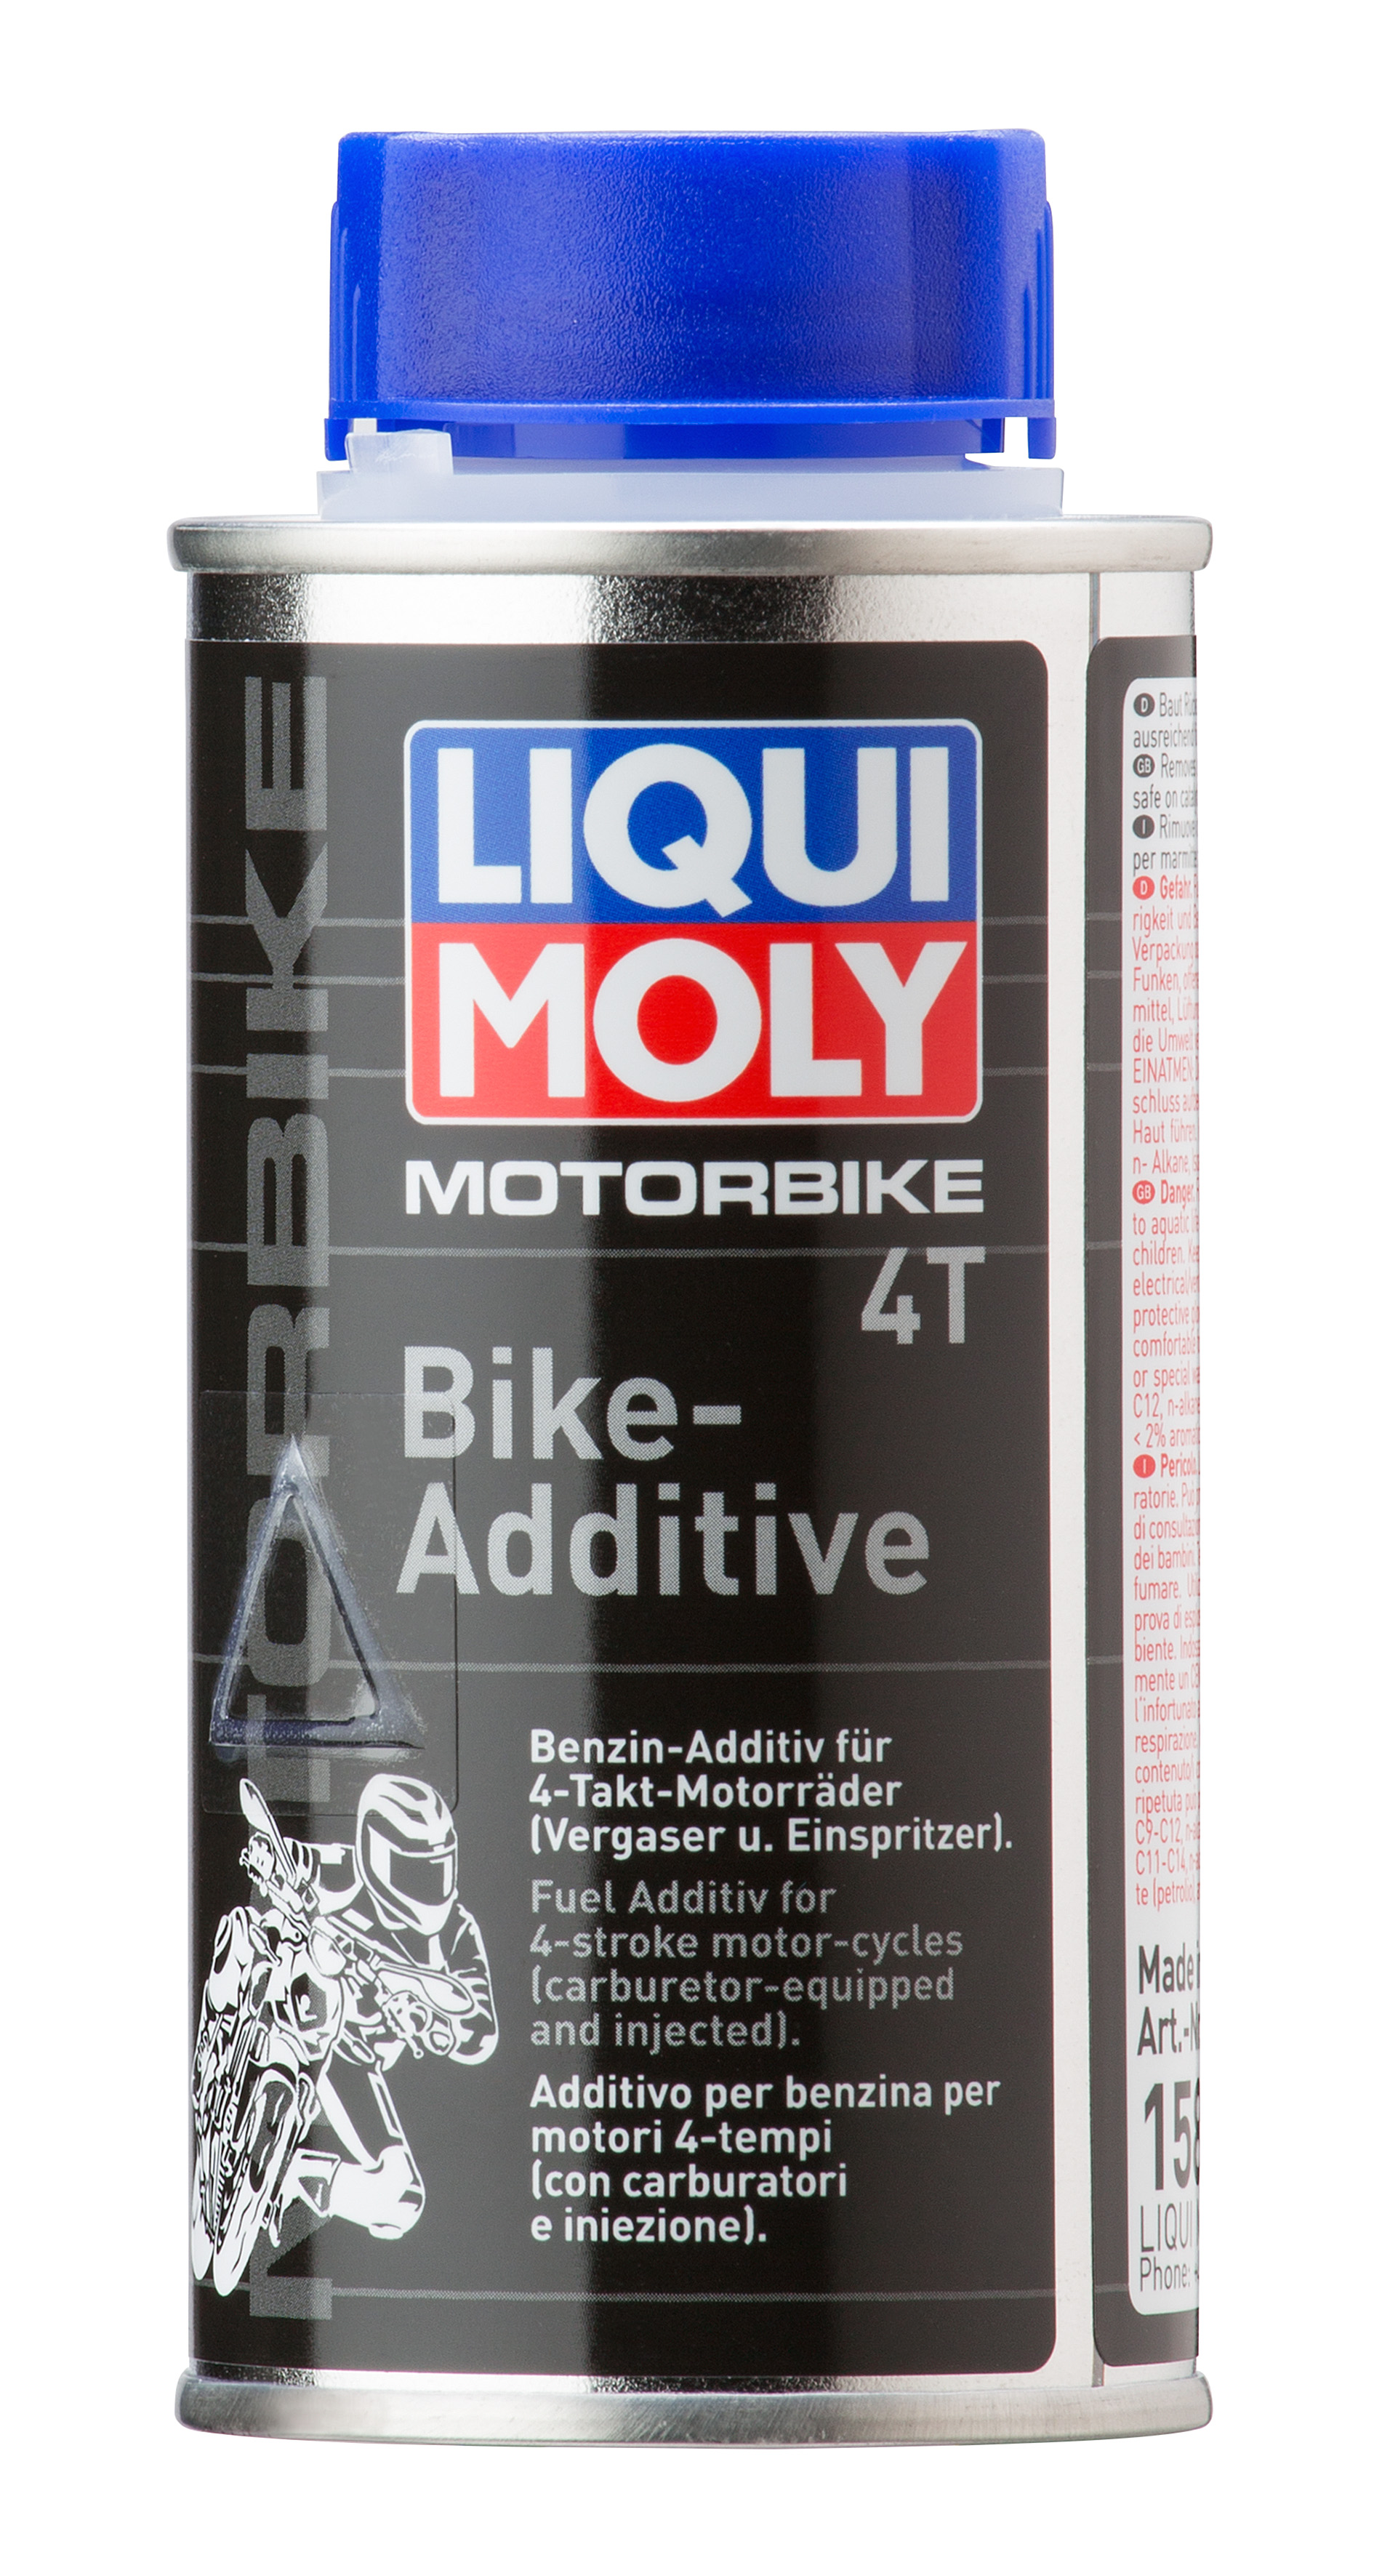 http://www.lorbeautomotive.com/upload/productos/1581_ADITIVO_COMBUSTIBLE_MOTOS_4T-liqui-moly.jpg